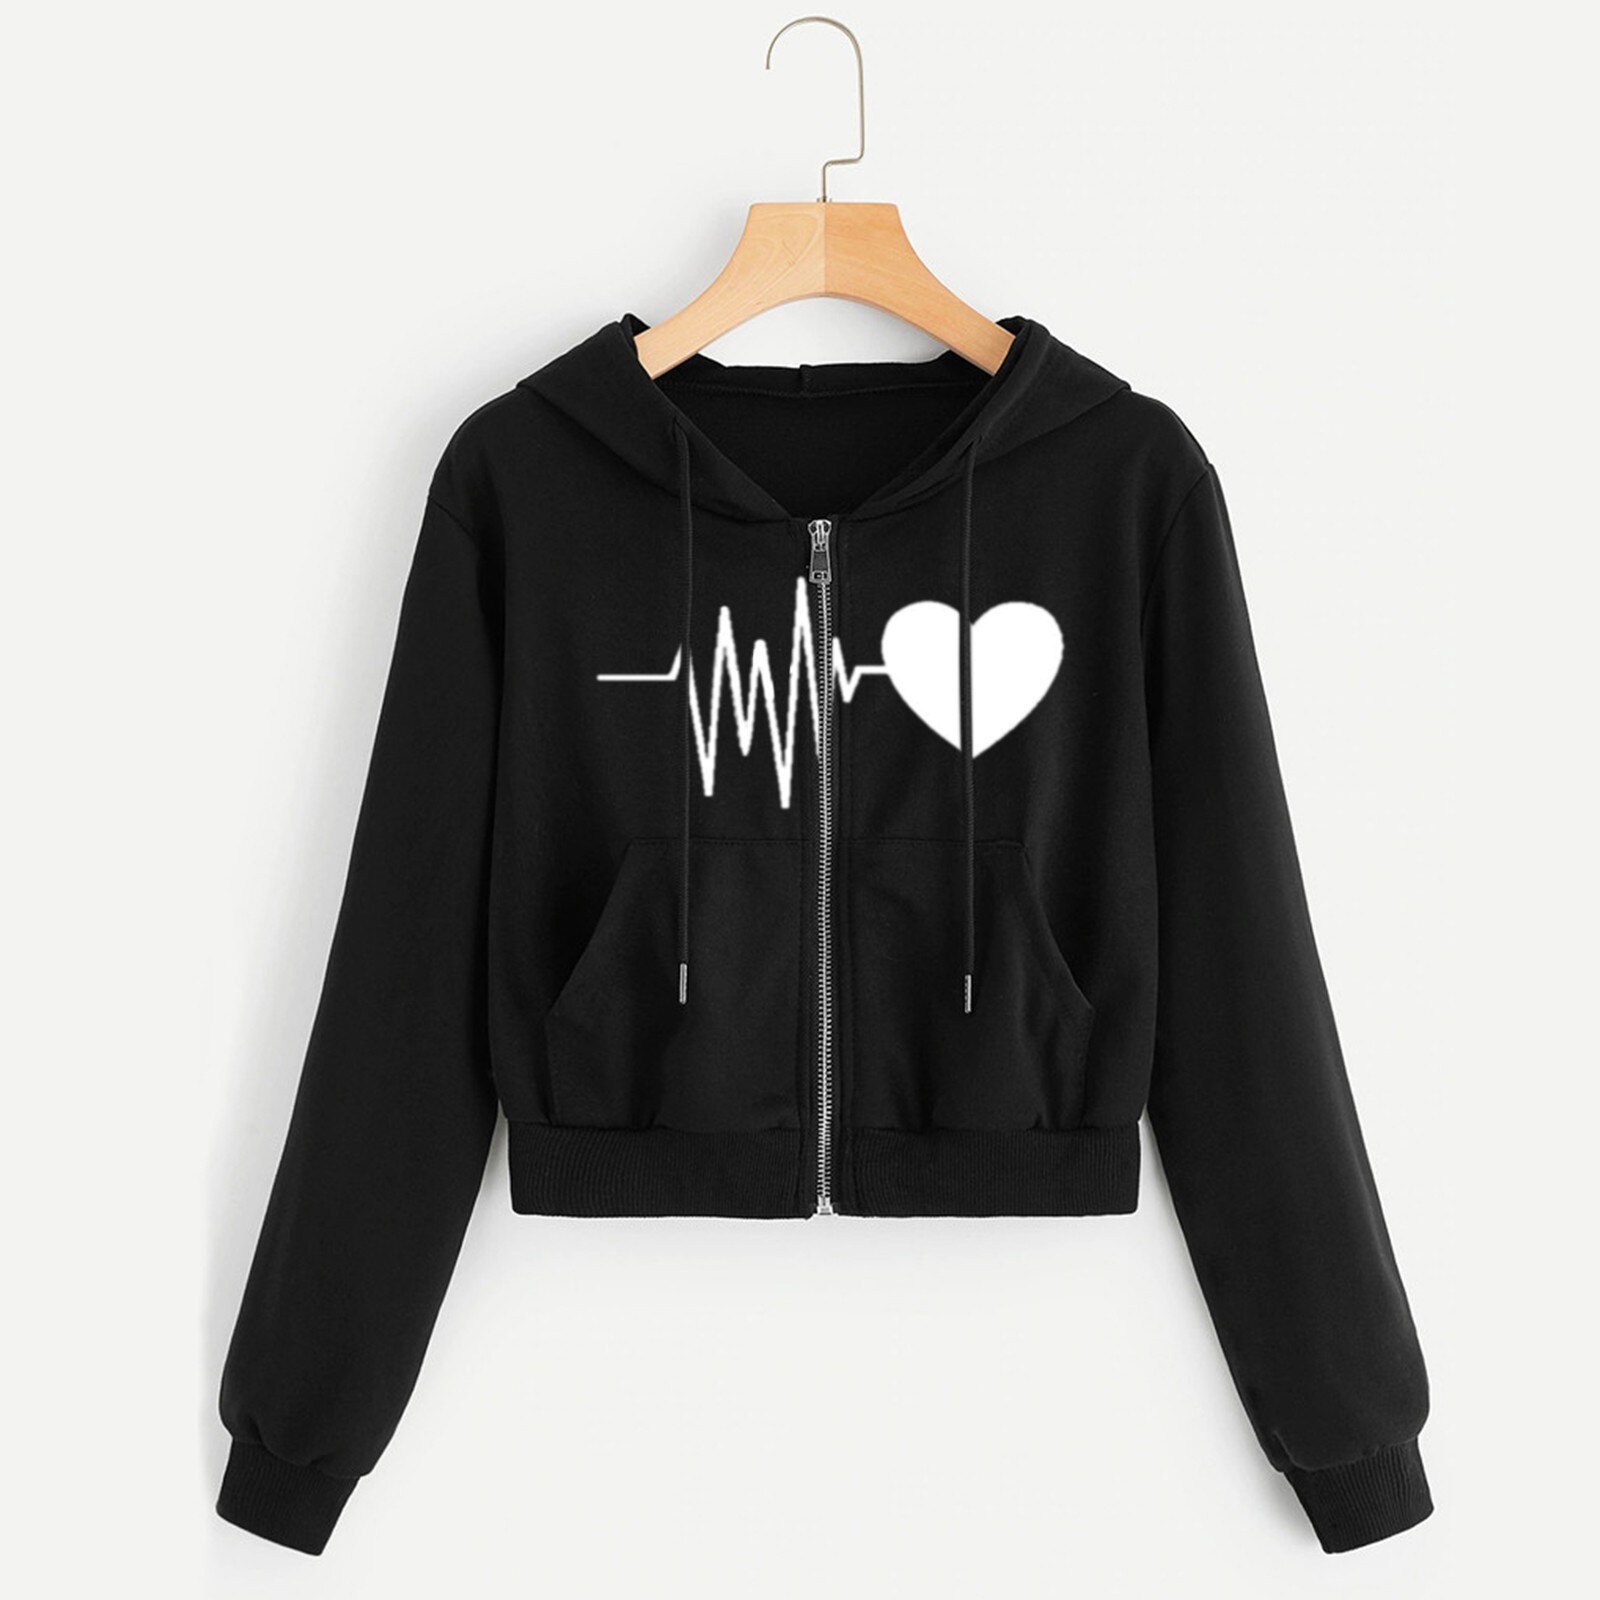 Heartbeat-Print-Zip-Up-Cropped-Hoodies-Sweatshirts-Sweatshirts-For-Teen-Girls-Harajuku-Kpop-Korean-Style-Clothes-1